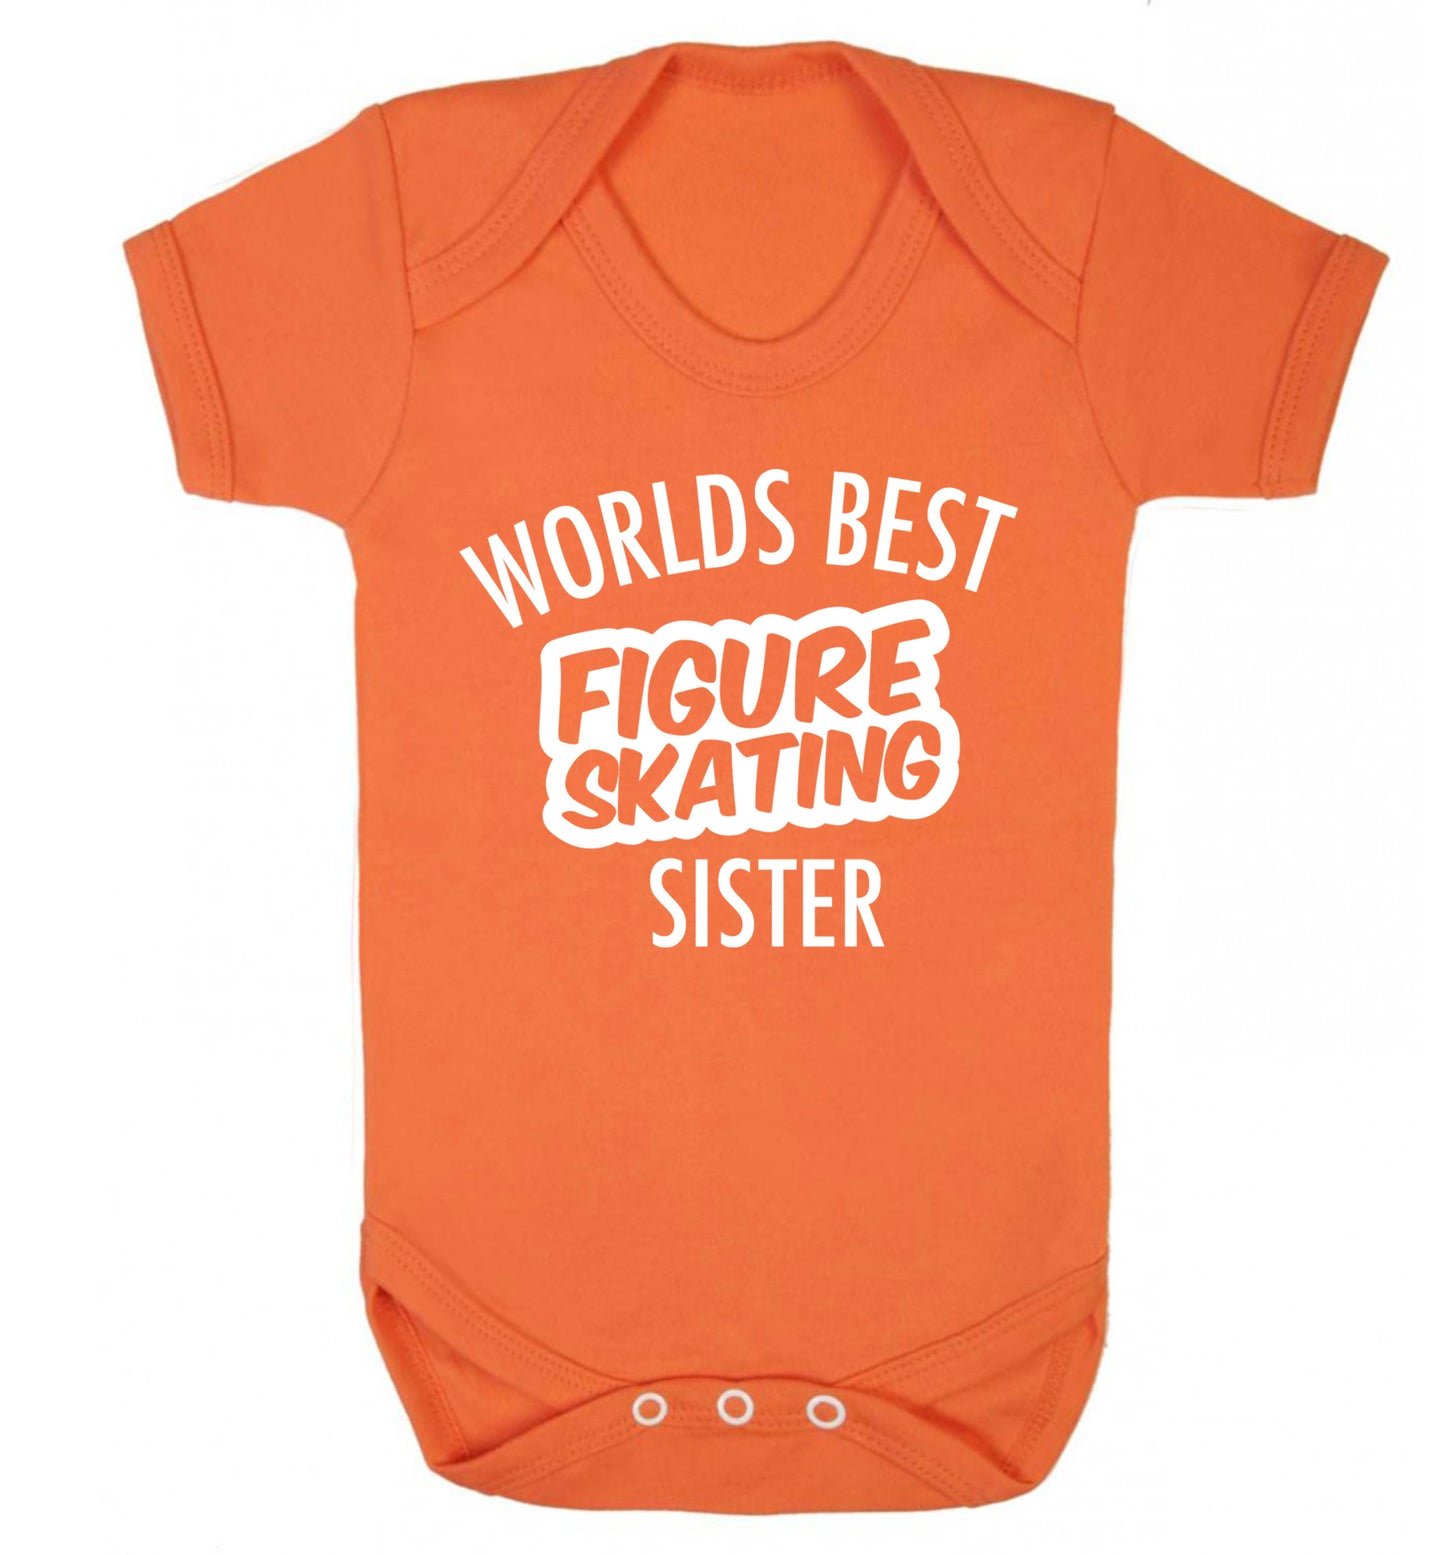 Worlds best figure skating sisterBaby Vest orange 18-24 months